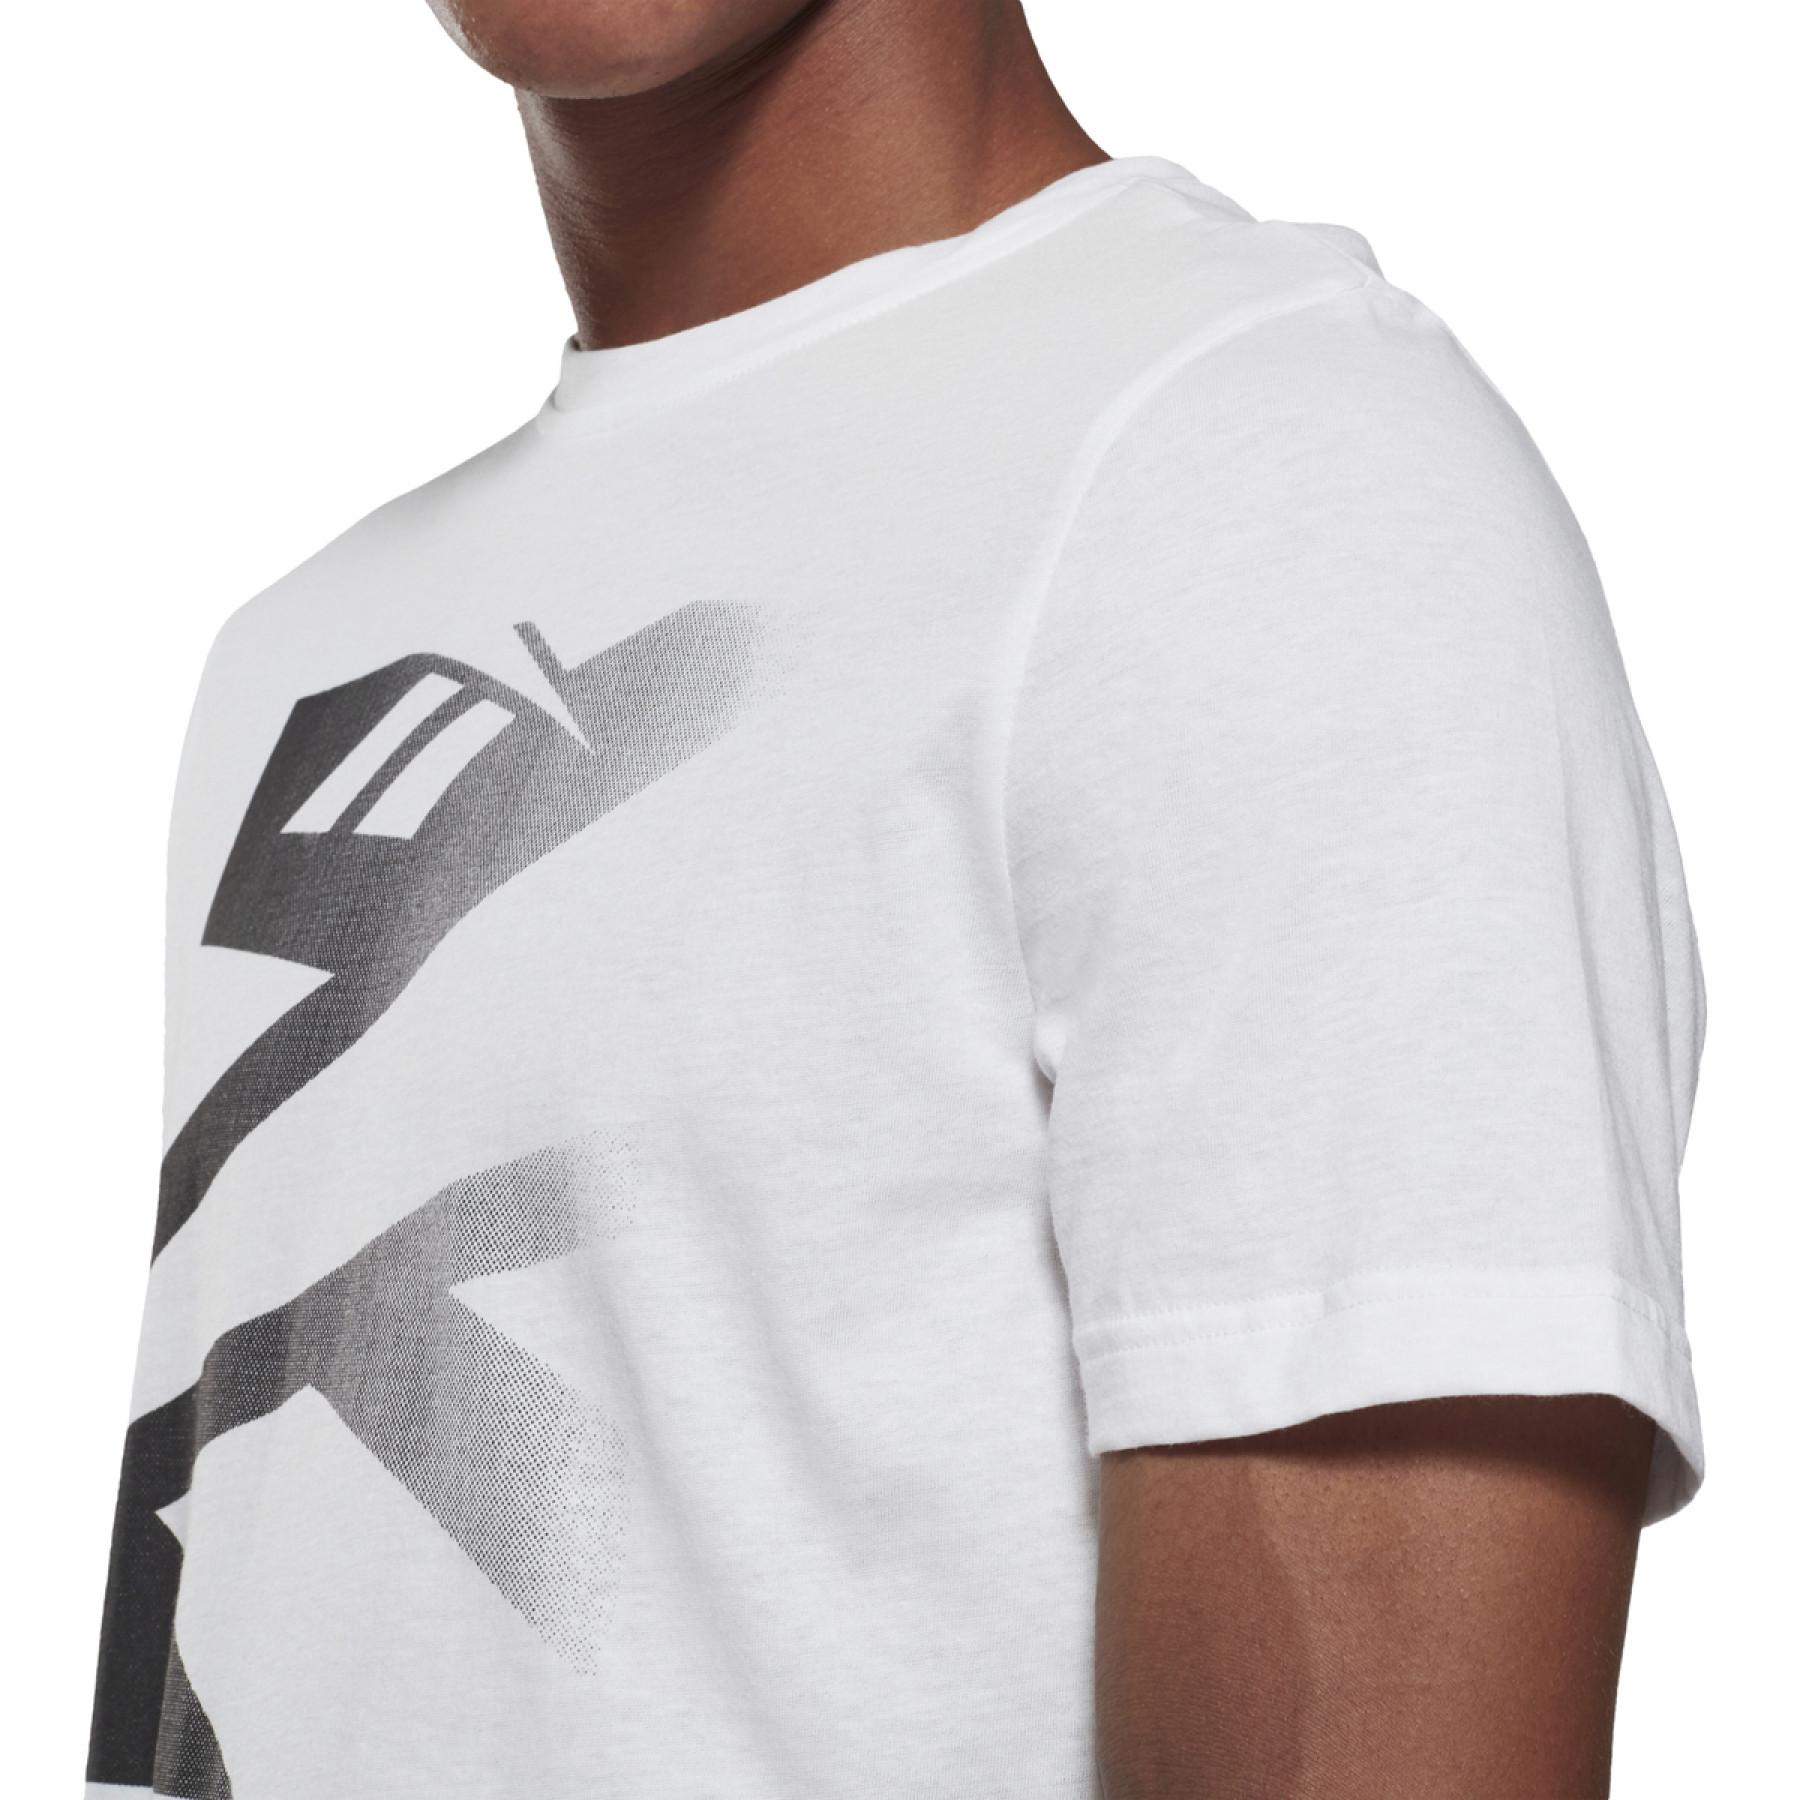 Camiseta Reebok Vector Fade Graphic